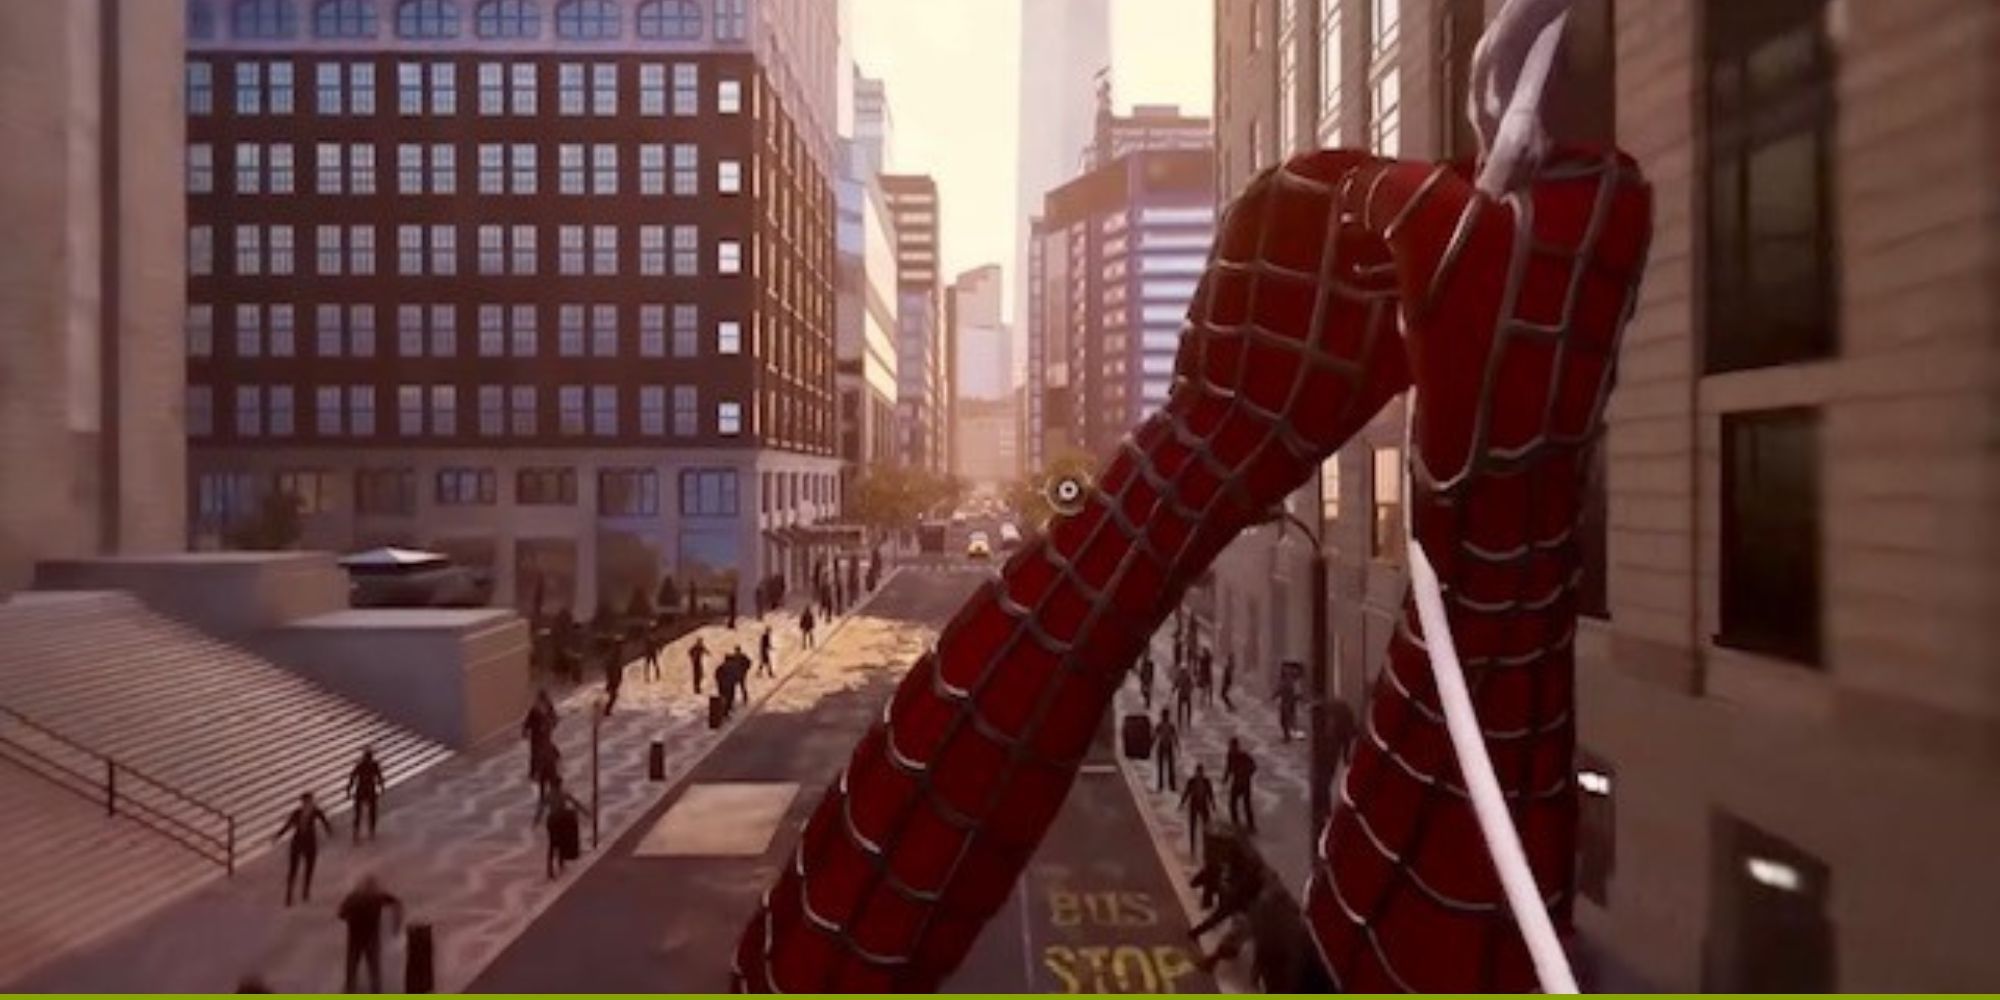 Spider-Man PC - First Person Mod Gameplay